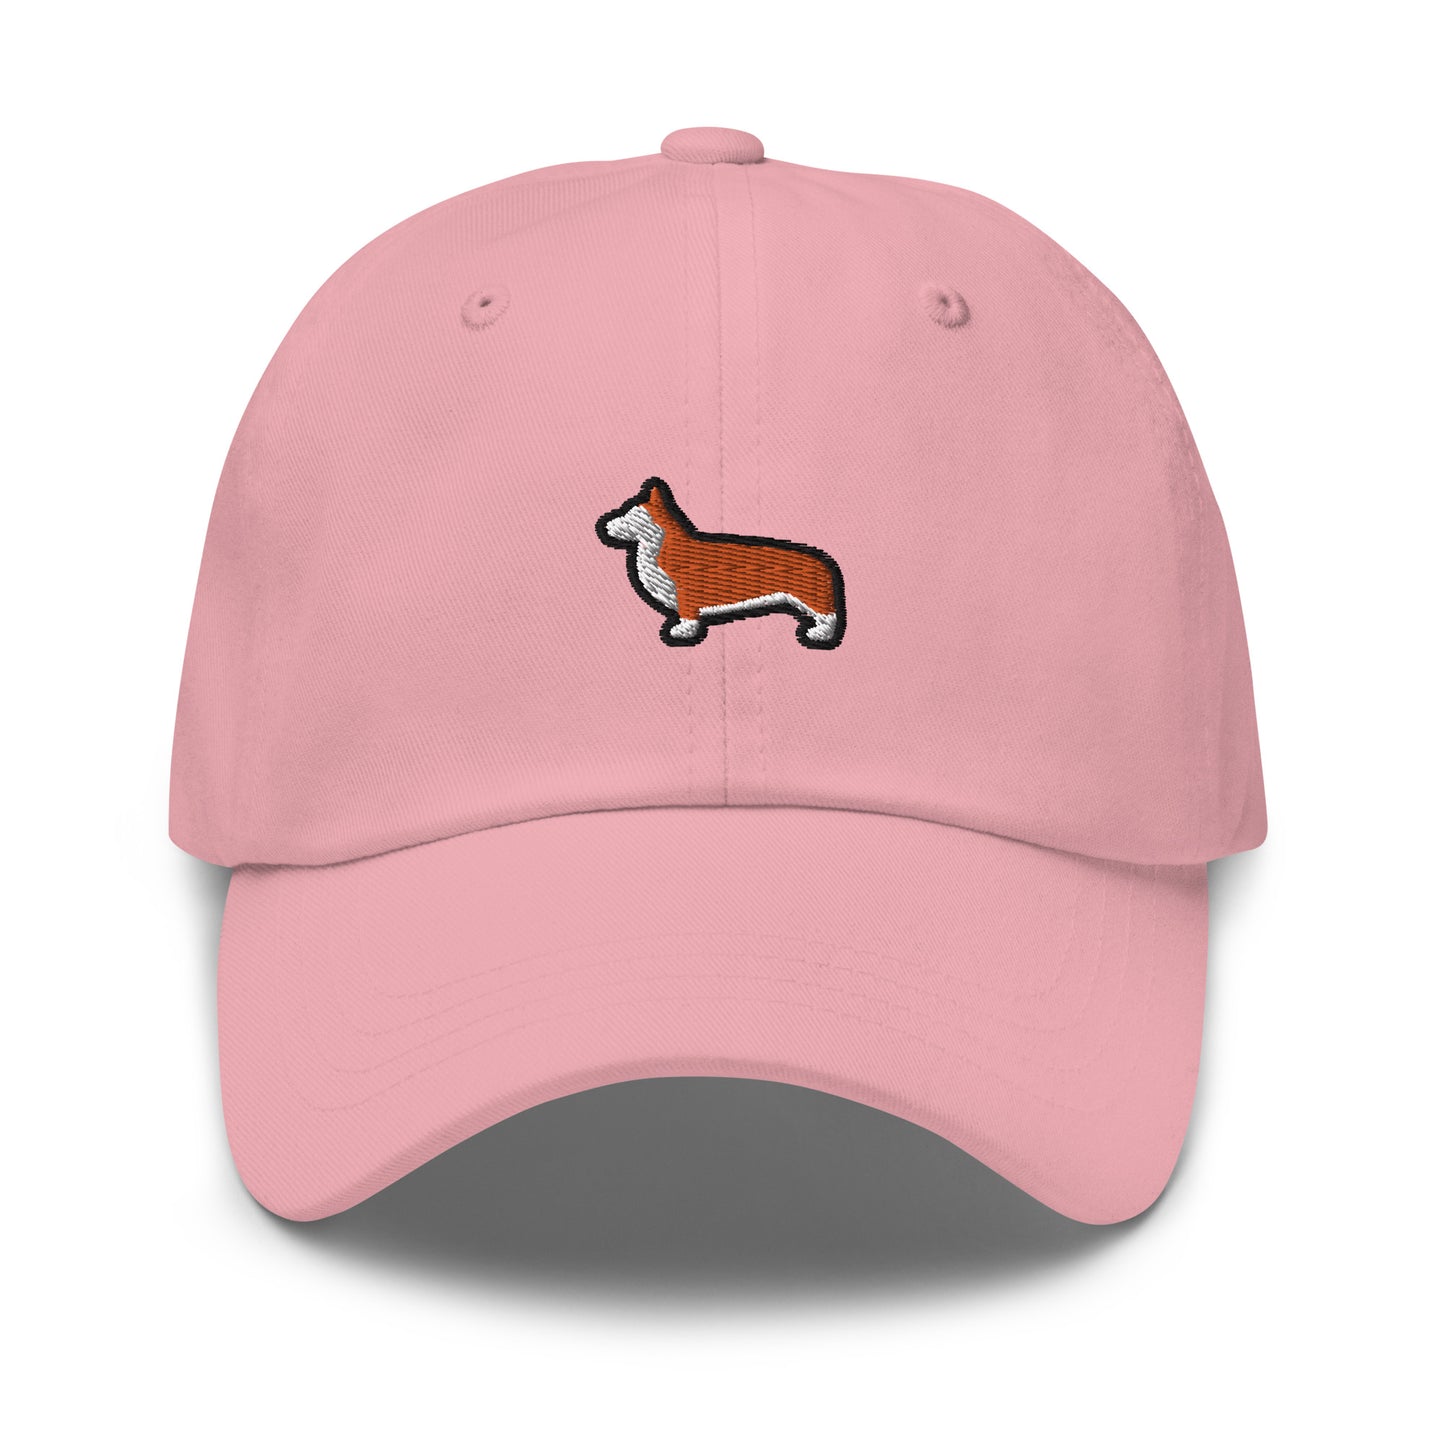 Corgi Dog Embroidered Baseball Cap